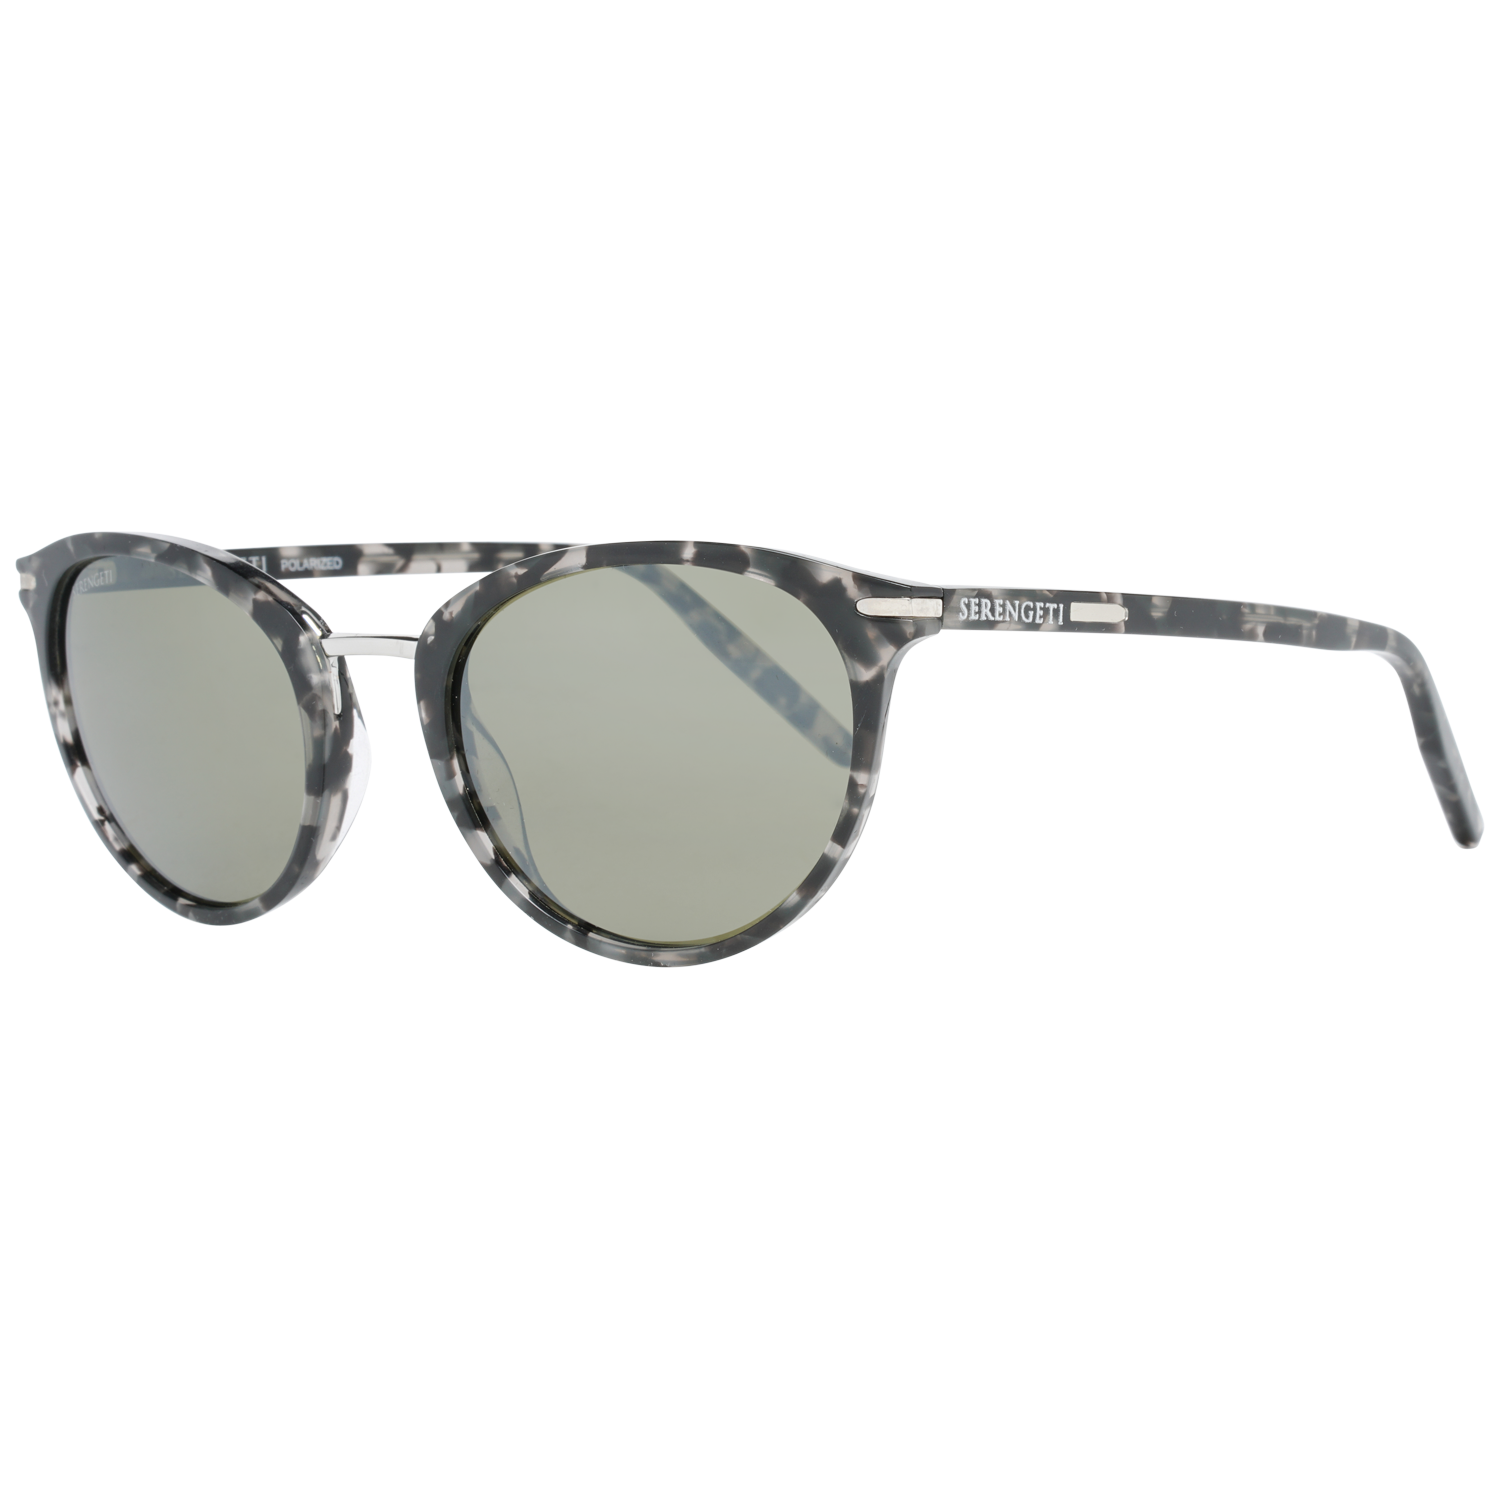 Serengeti Sunglasses 8847 Elyna 54 Shiny Black Tortoise Grey